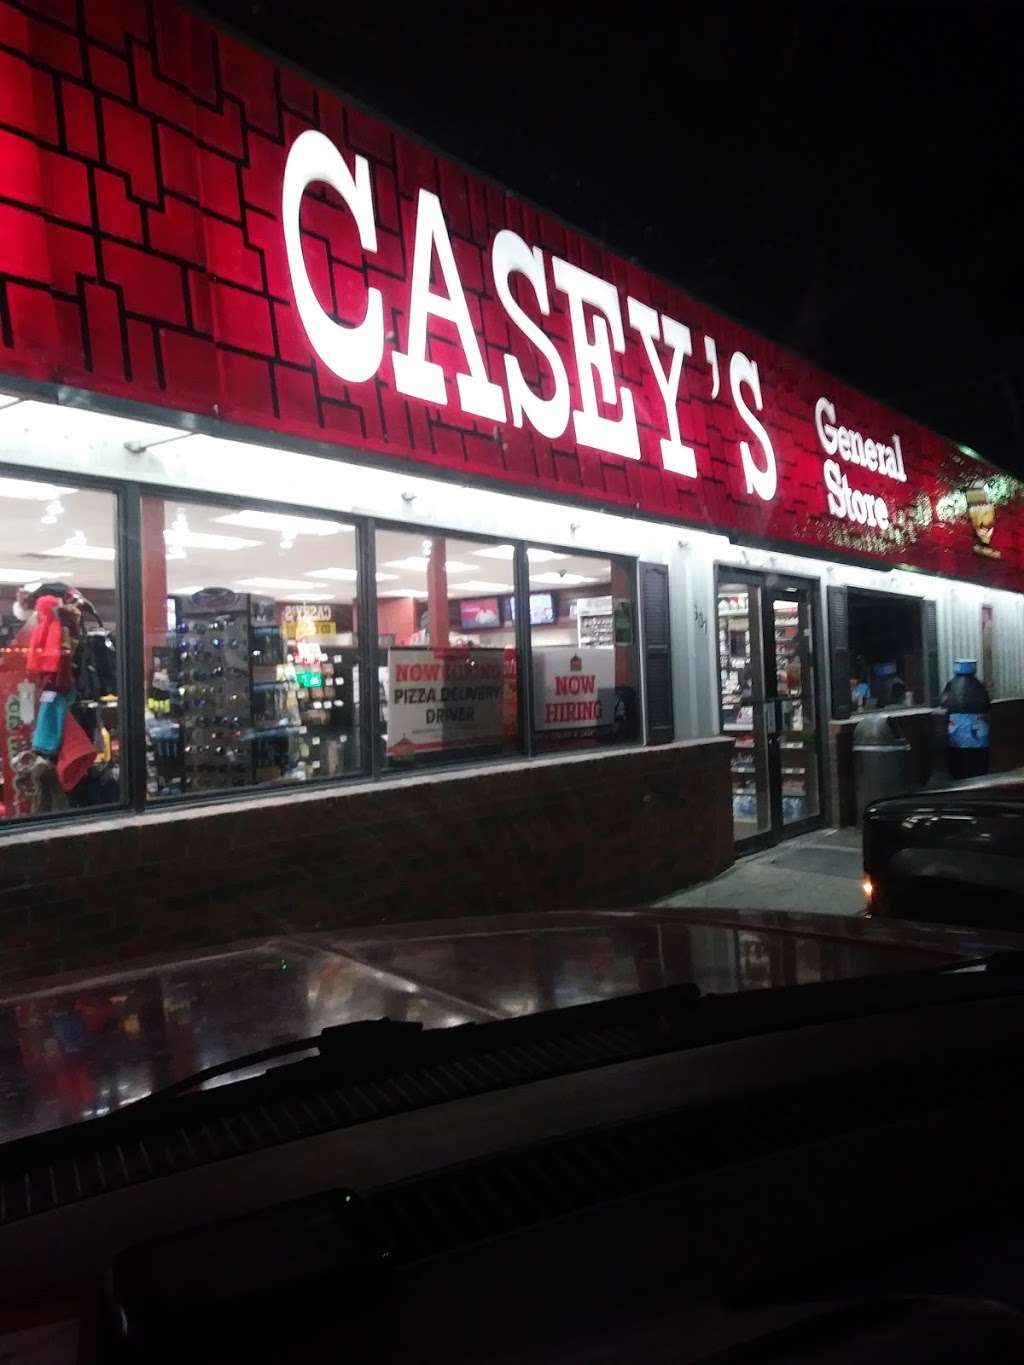 Caseys General Store | 607 N Webster St, Spring Hill, KS 66083, USA | Phone: (913) 686-2100